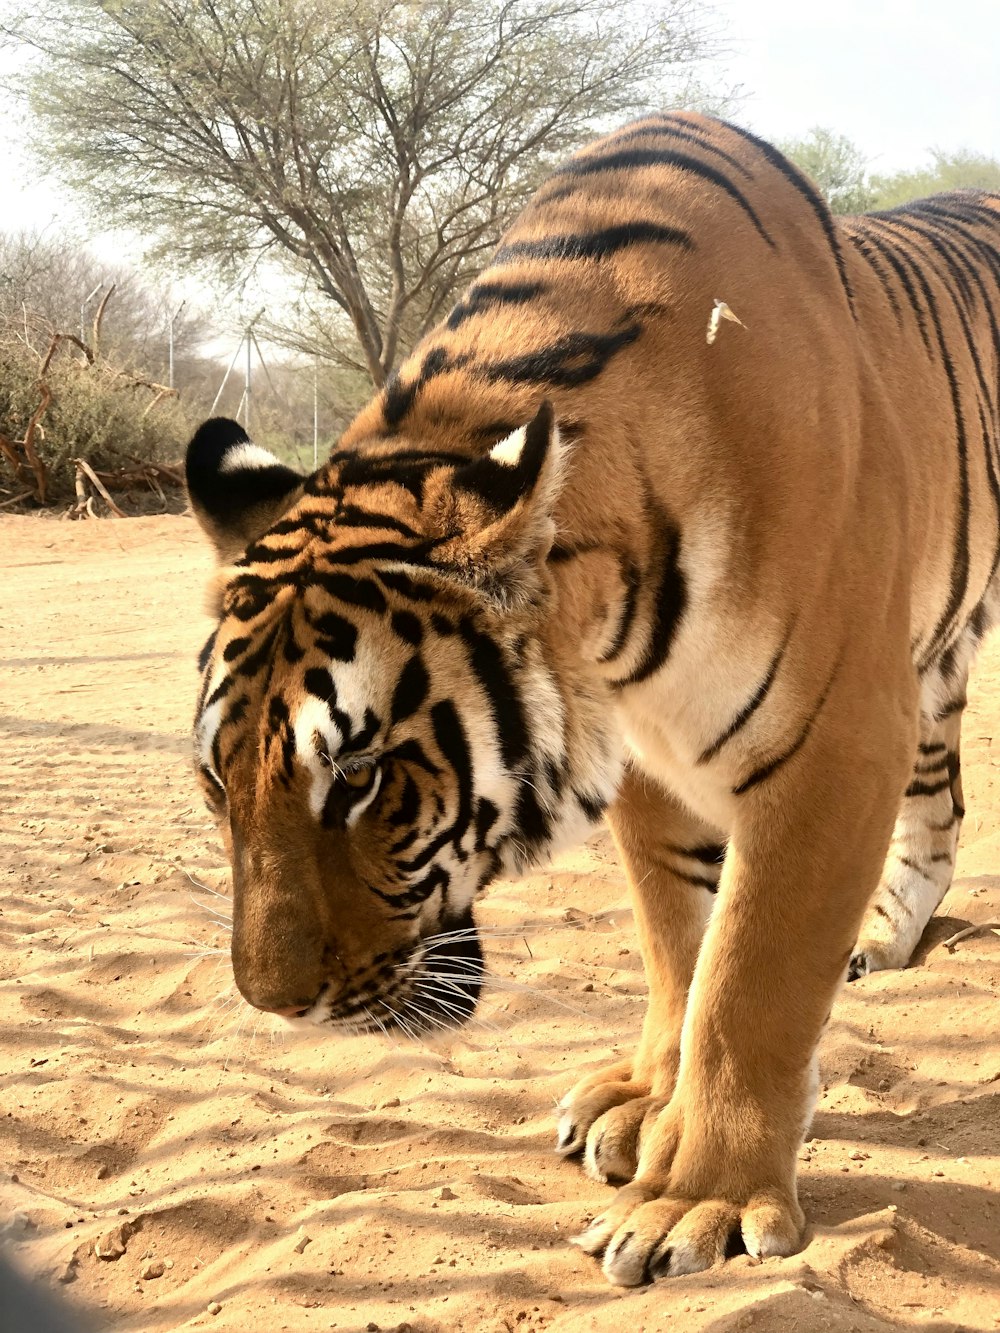 a tiger walking on dirt